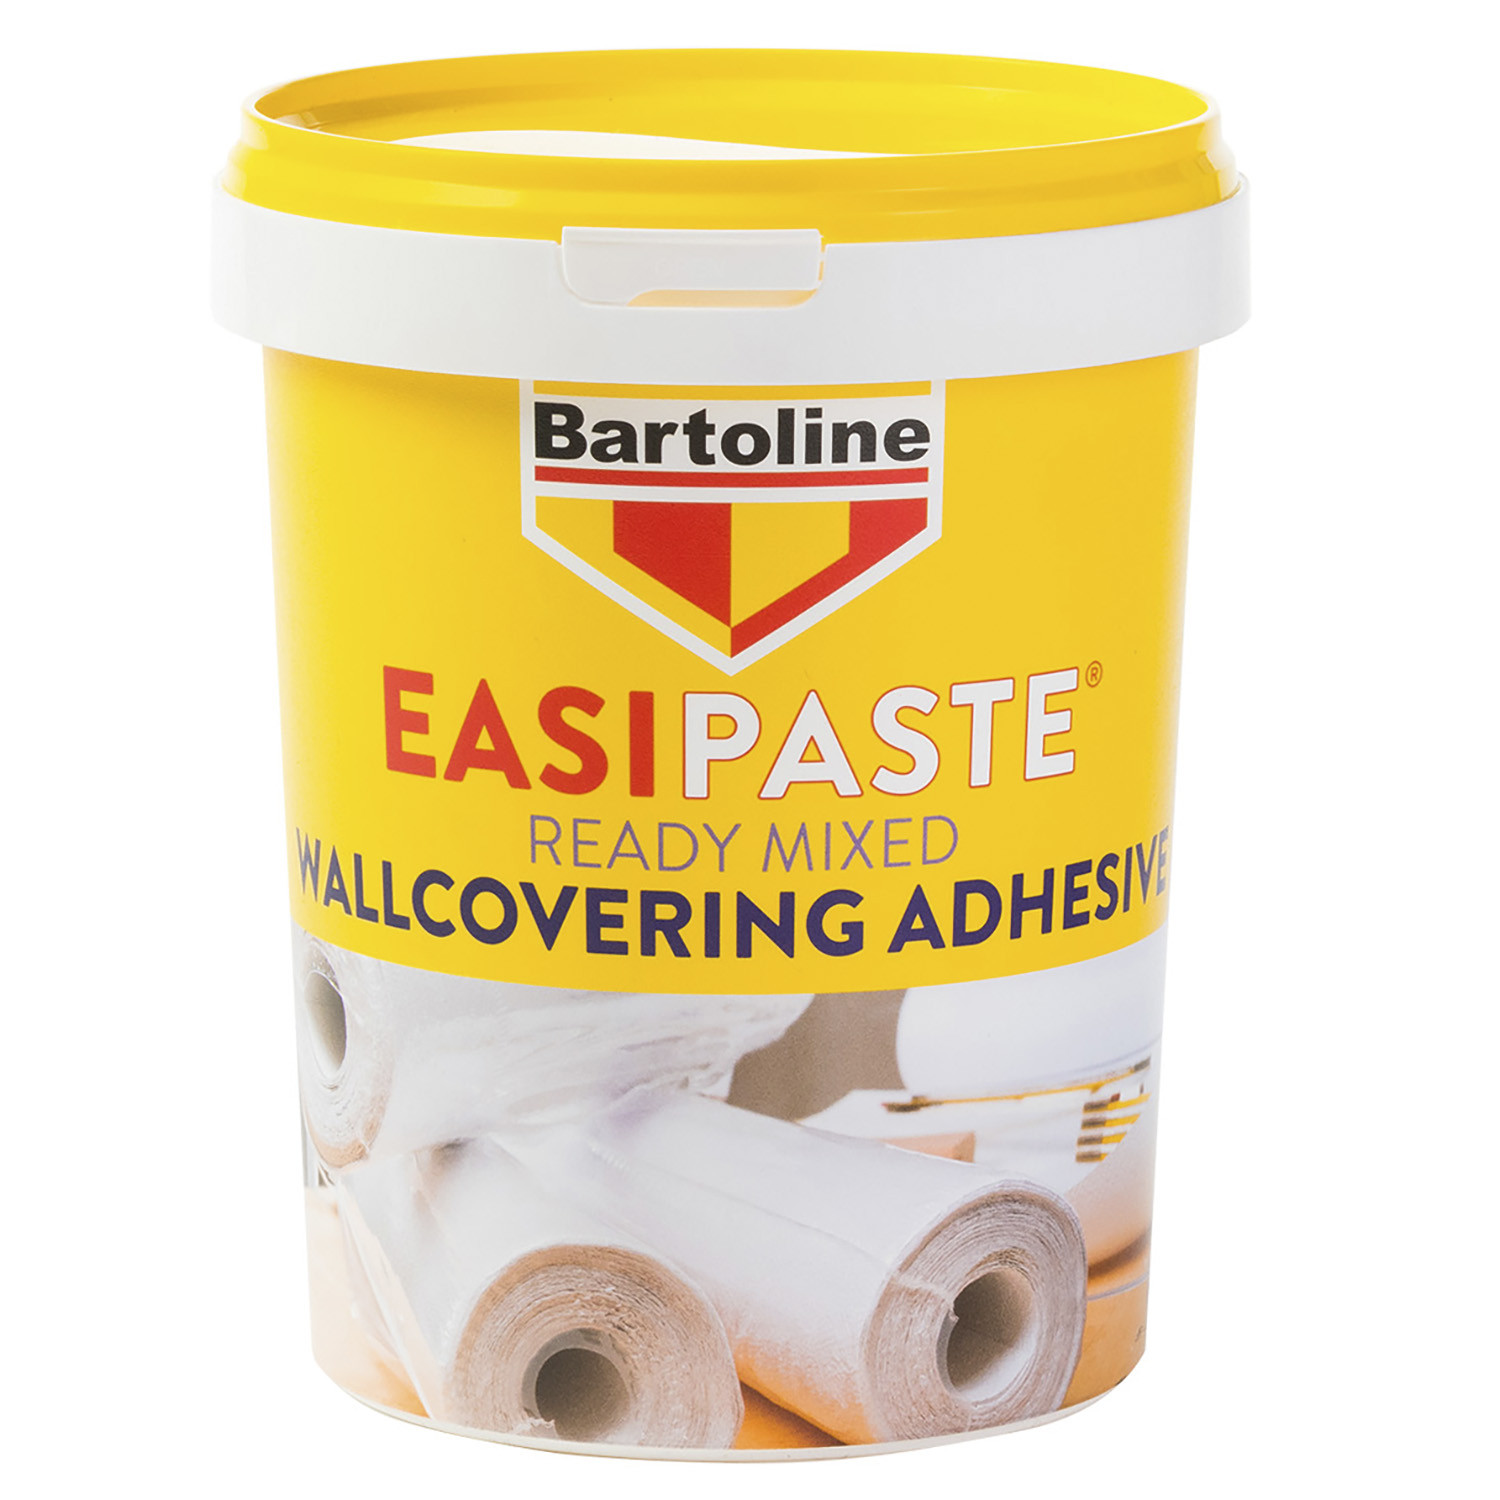 Bartoline Easipaste Ready Mixed Wallpaper Adhesive 1L Image